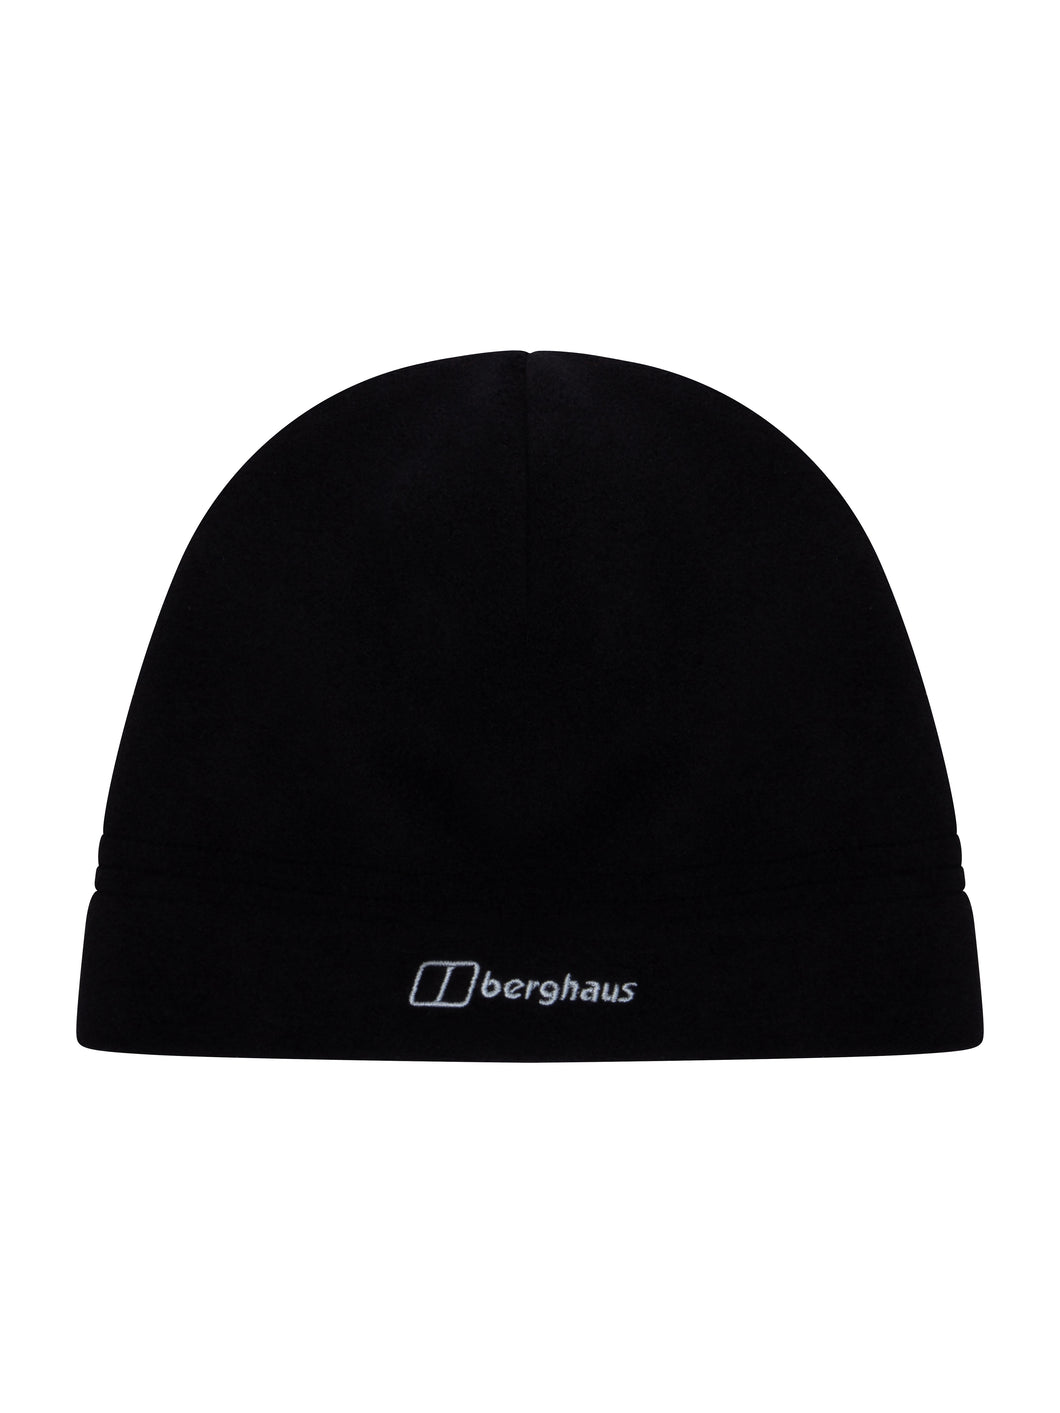 Berghaus Prism Polartec Beanie Hat (Black)